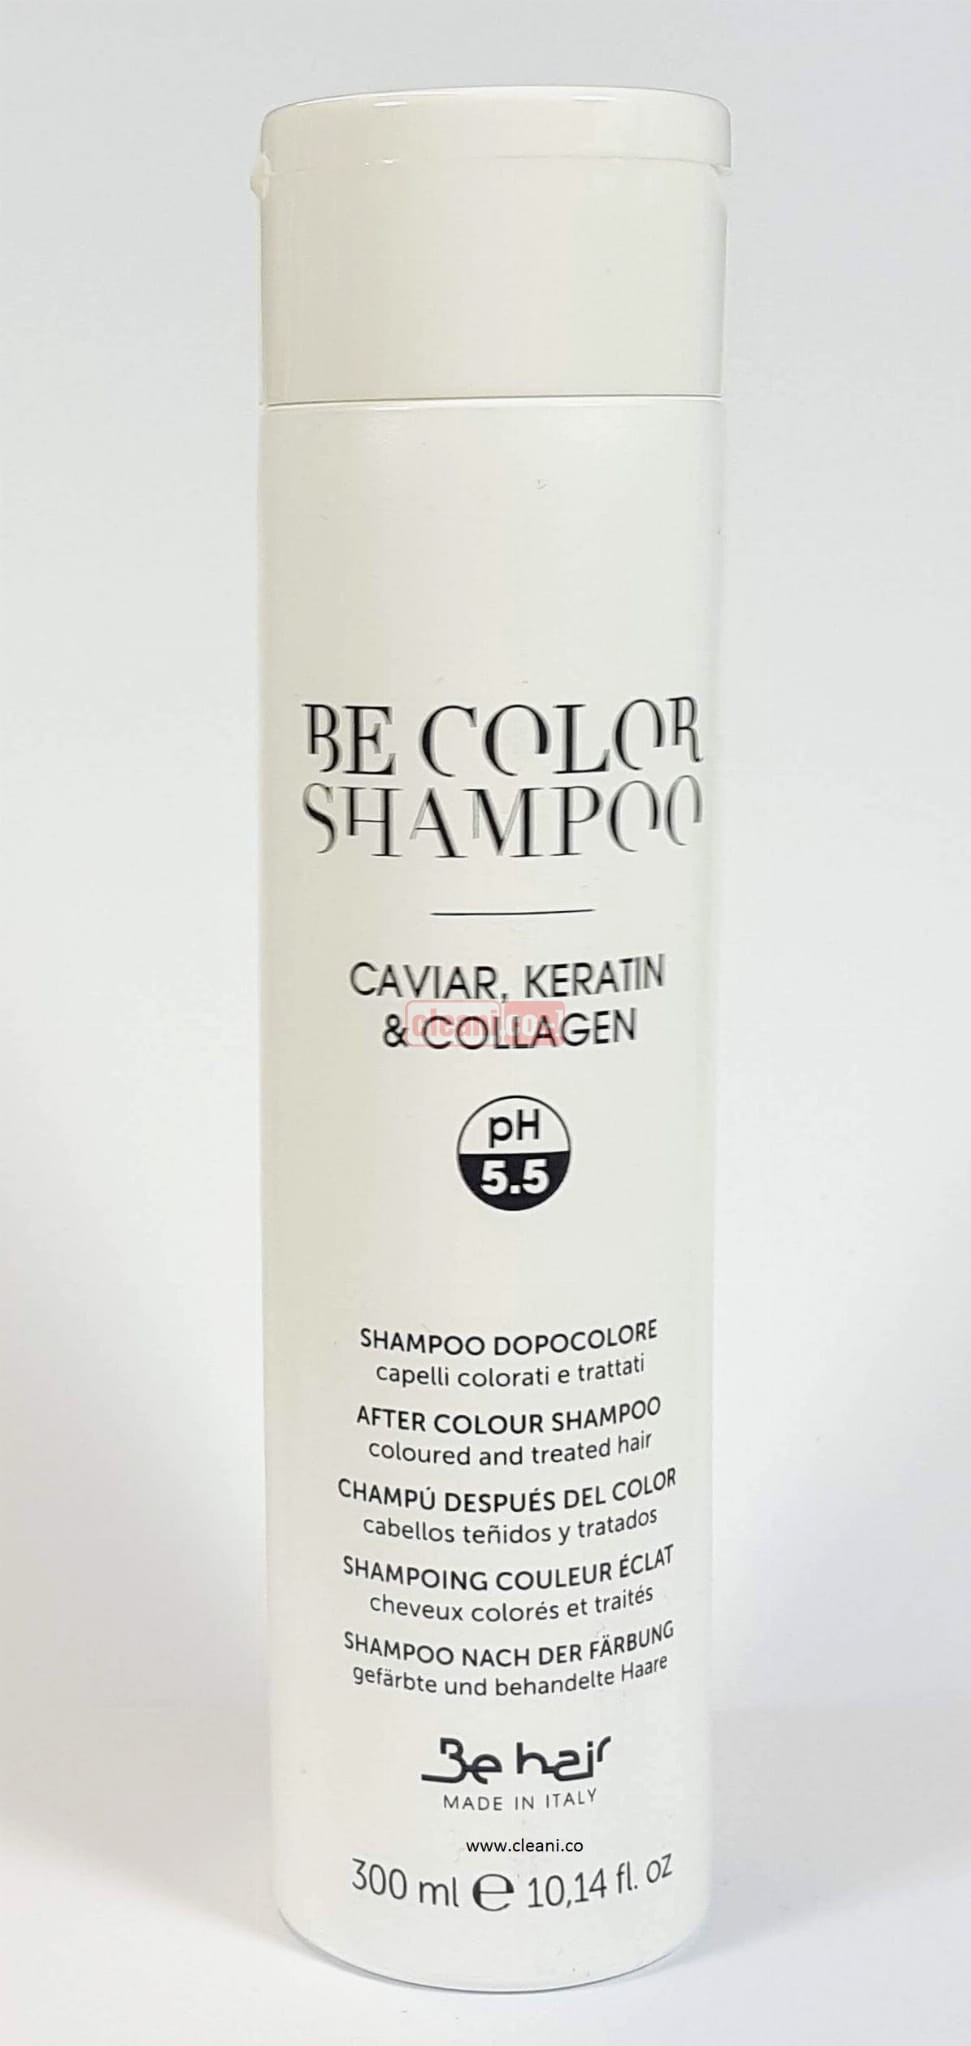 szampon be color shampoo be hair italy